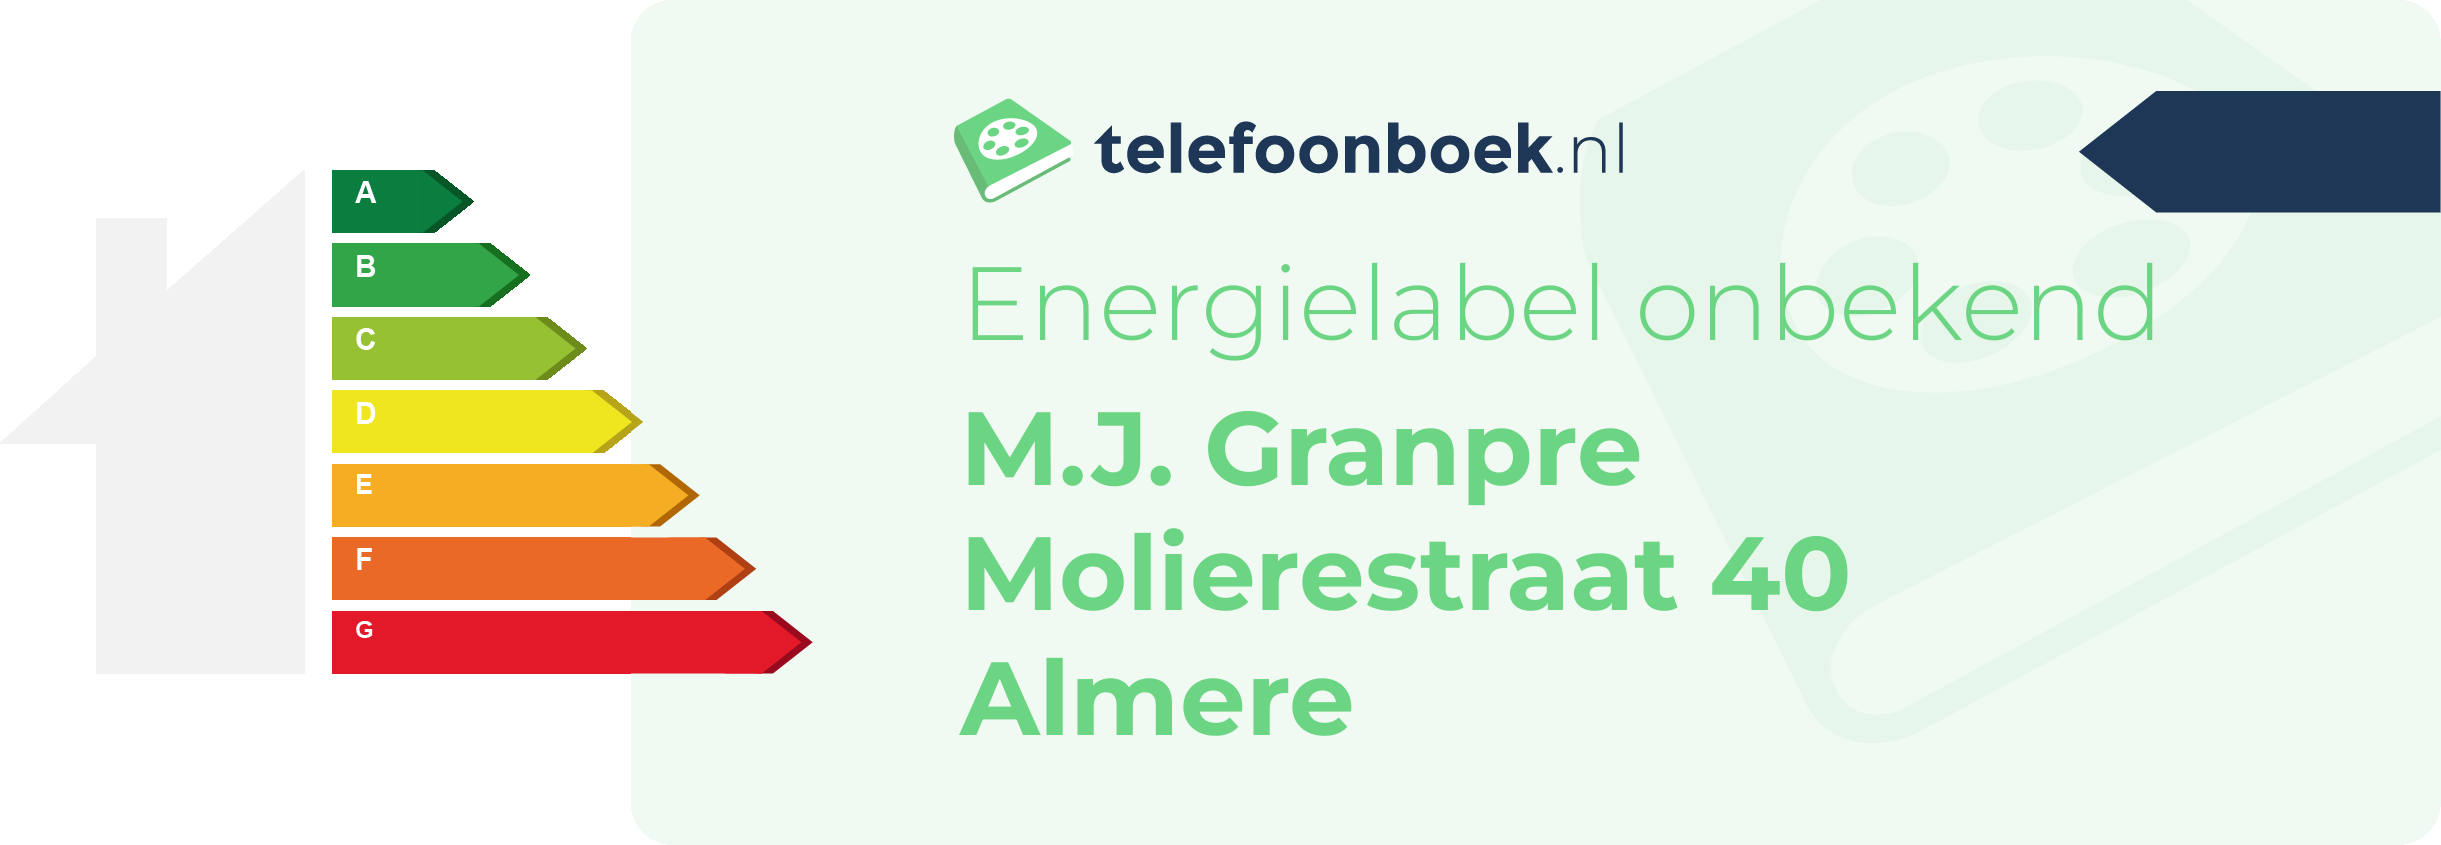 Energielabel M.J. Granpre Molierestraat 40 Almere